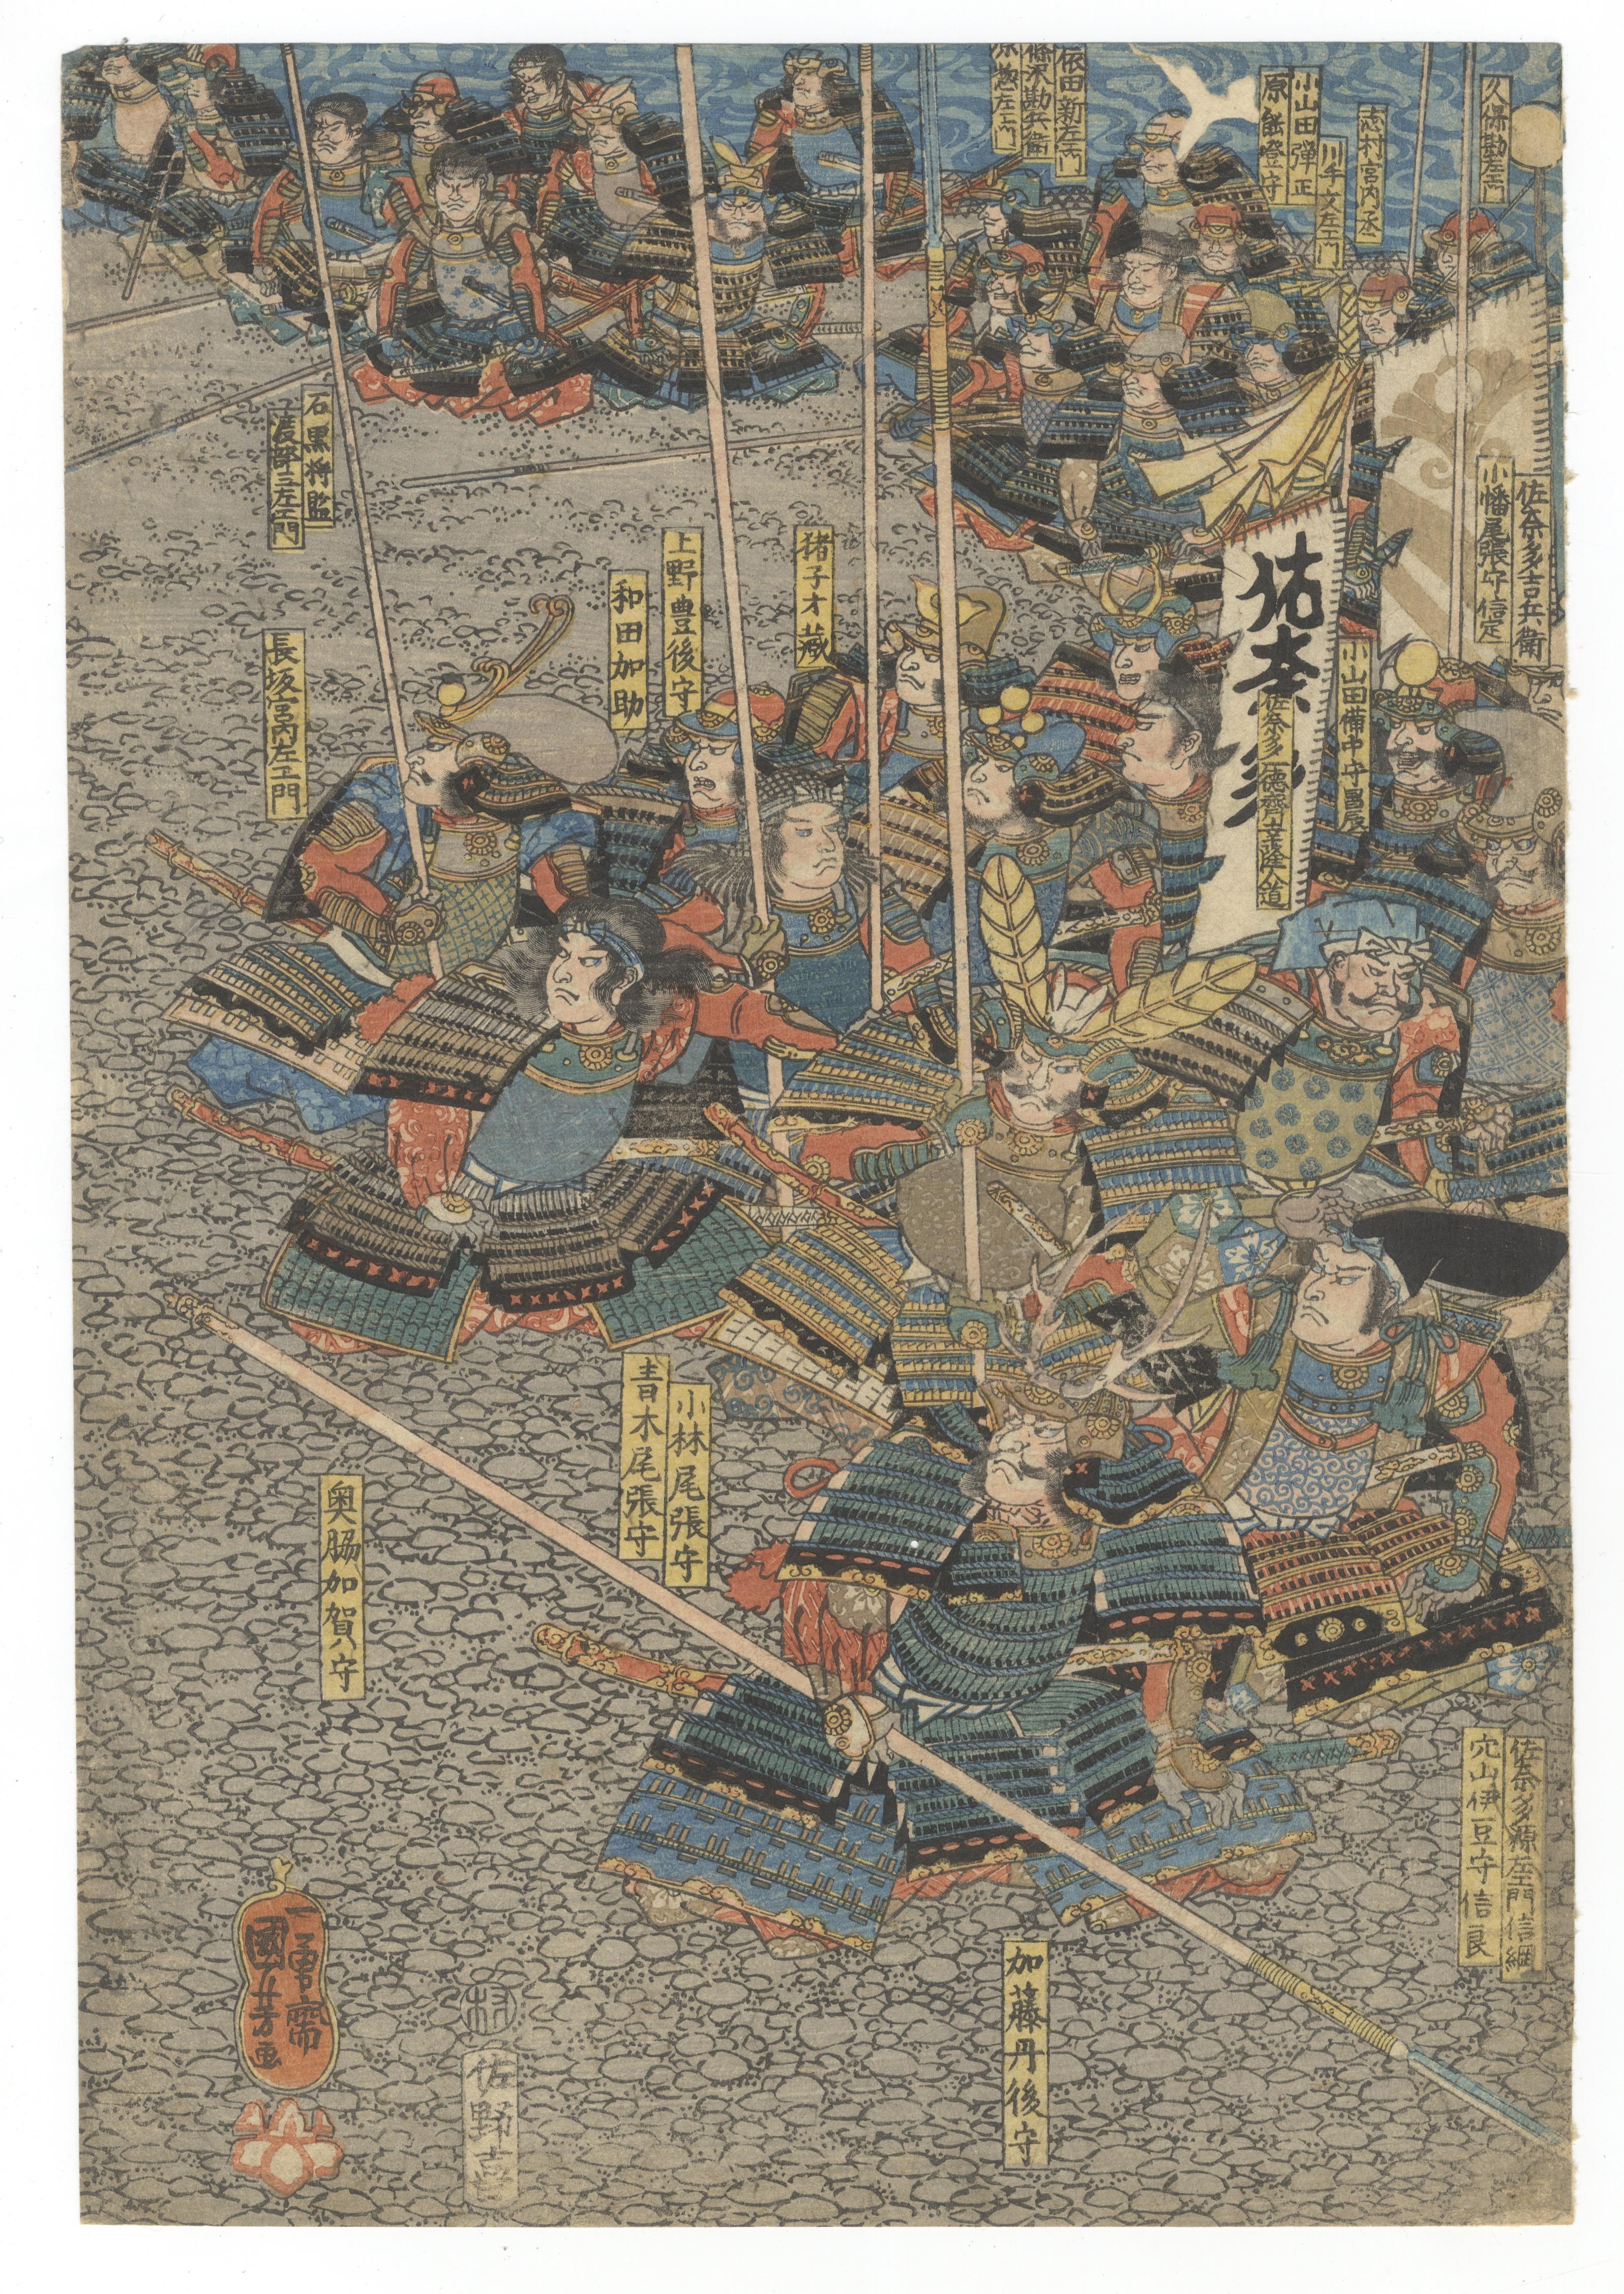 Artist: Kuniyoshi Utagawa (1797-1861)
Title: The Great Battle of Kawanakajima
Publisher: Sanoya Kihei
Date: c. 1842-1846
Dimensions: (L) 25 x 36.3 (C) 25.1 x 36.3 (R) 25.1 x 36.3 cm

In layers of pebbles, armour and rippling water, Kuniyoshi